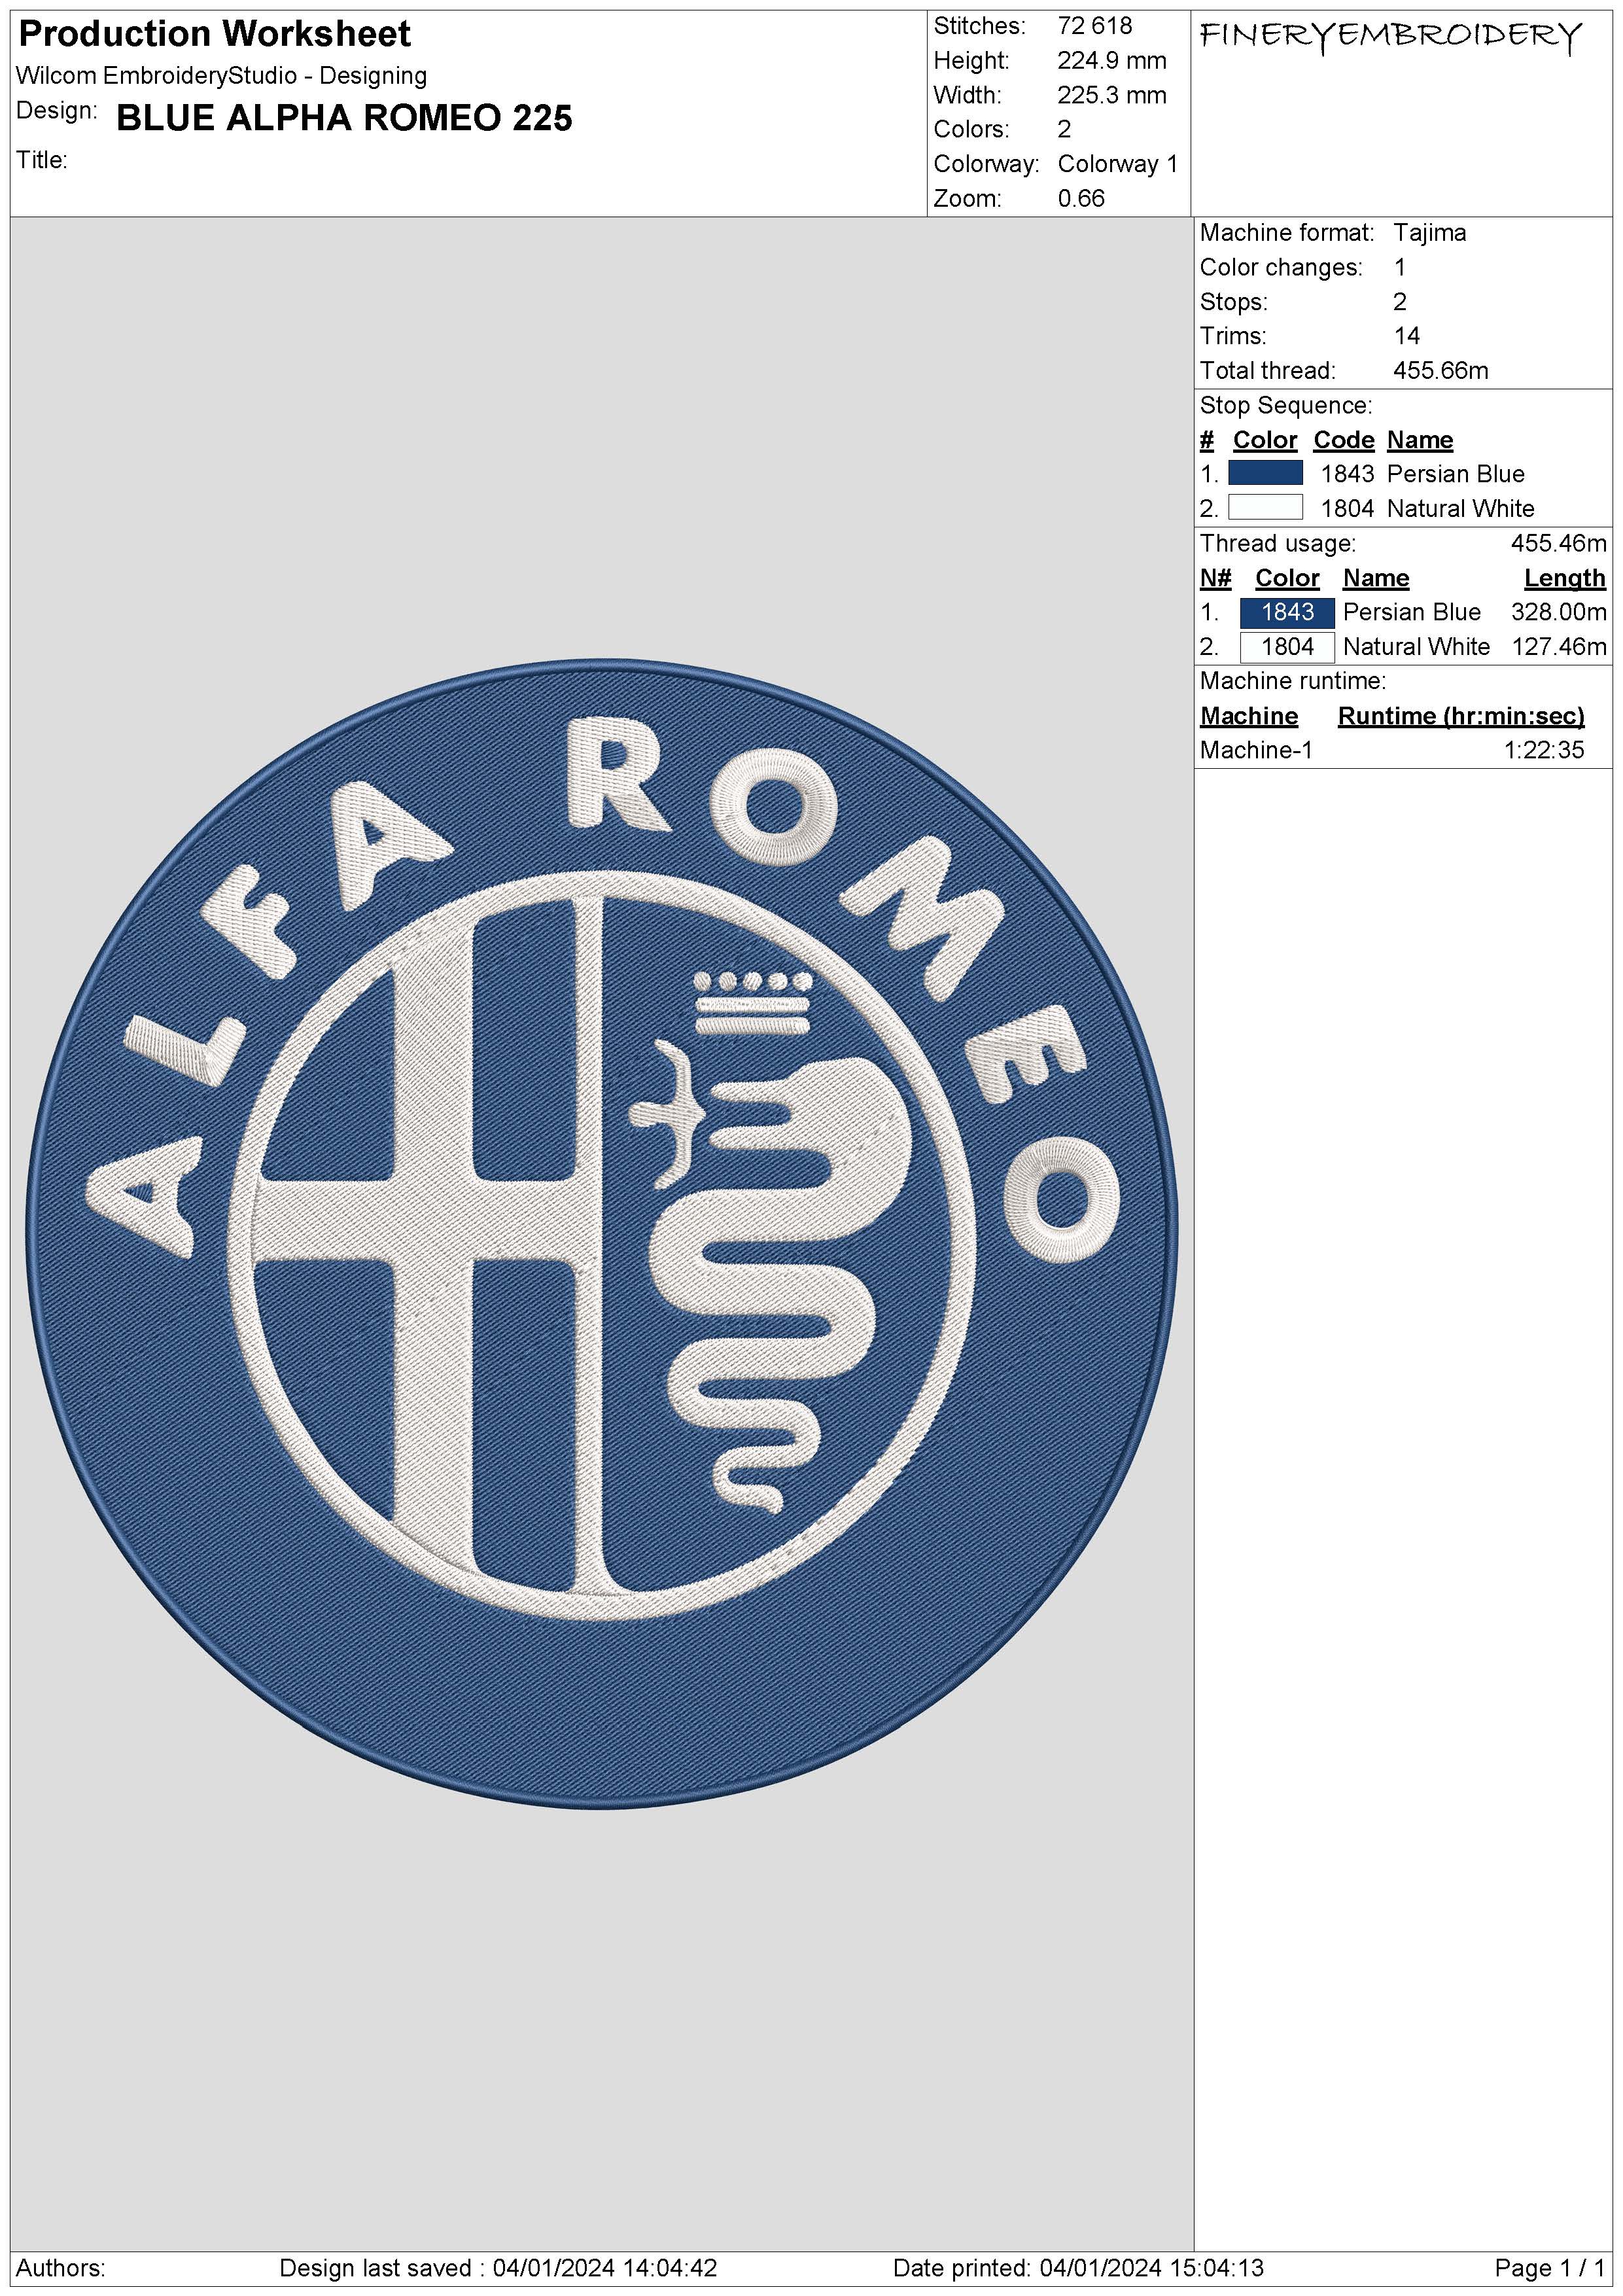 Blue Alpha Romeo Embroidery Design